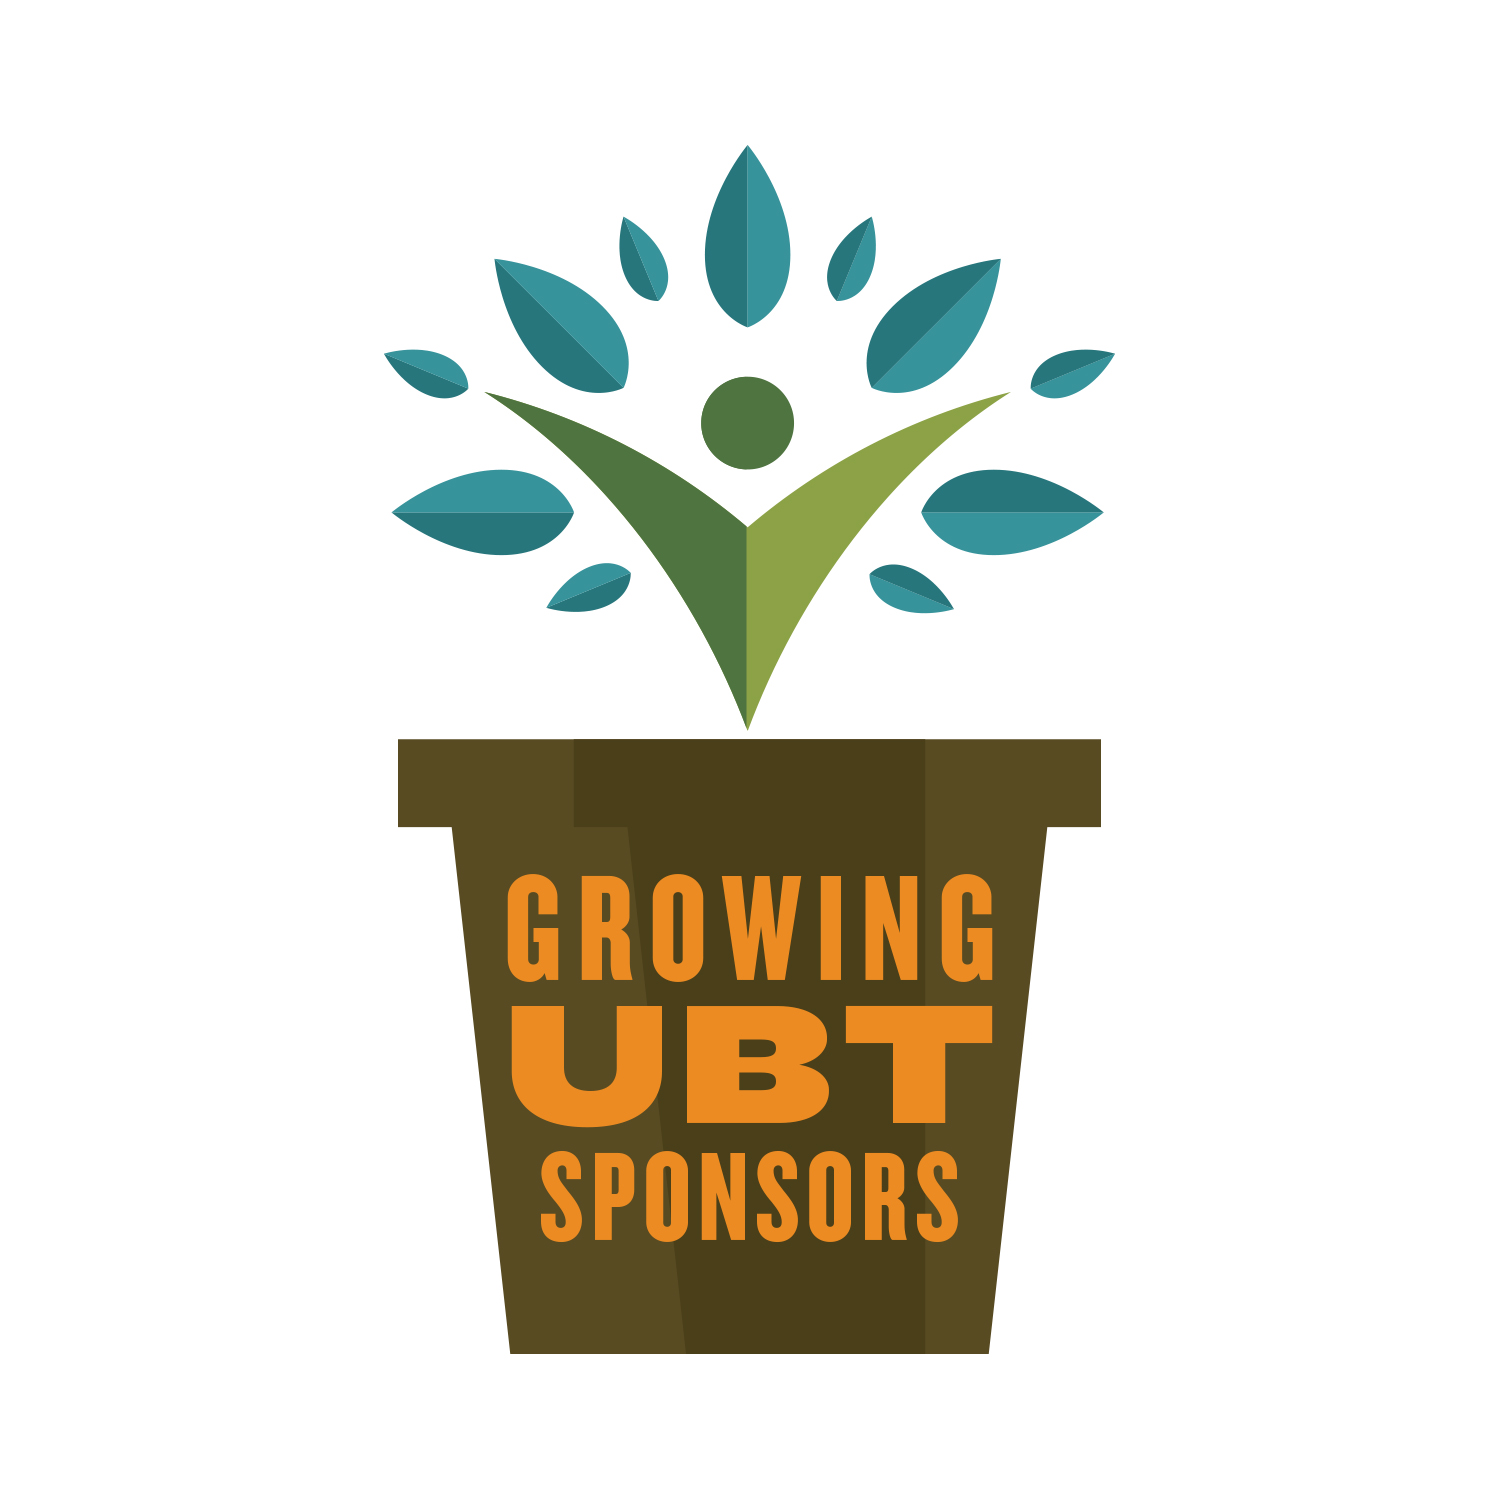 The growing ubt sponsors logo